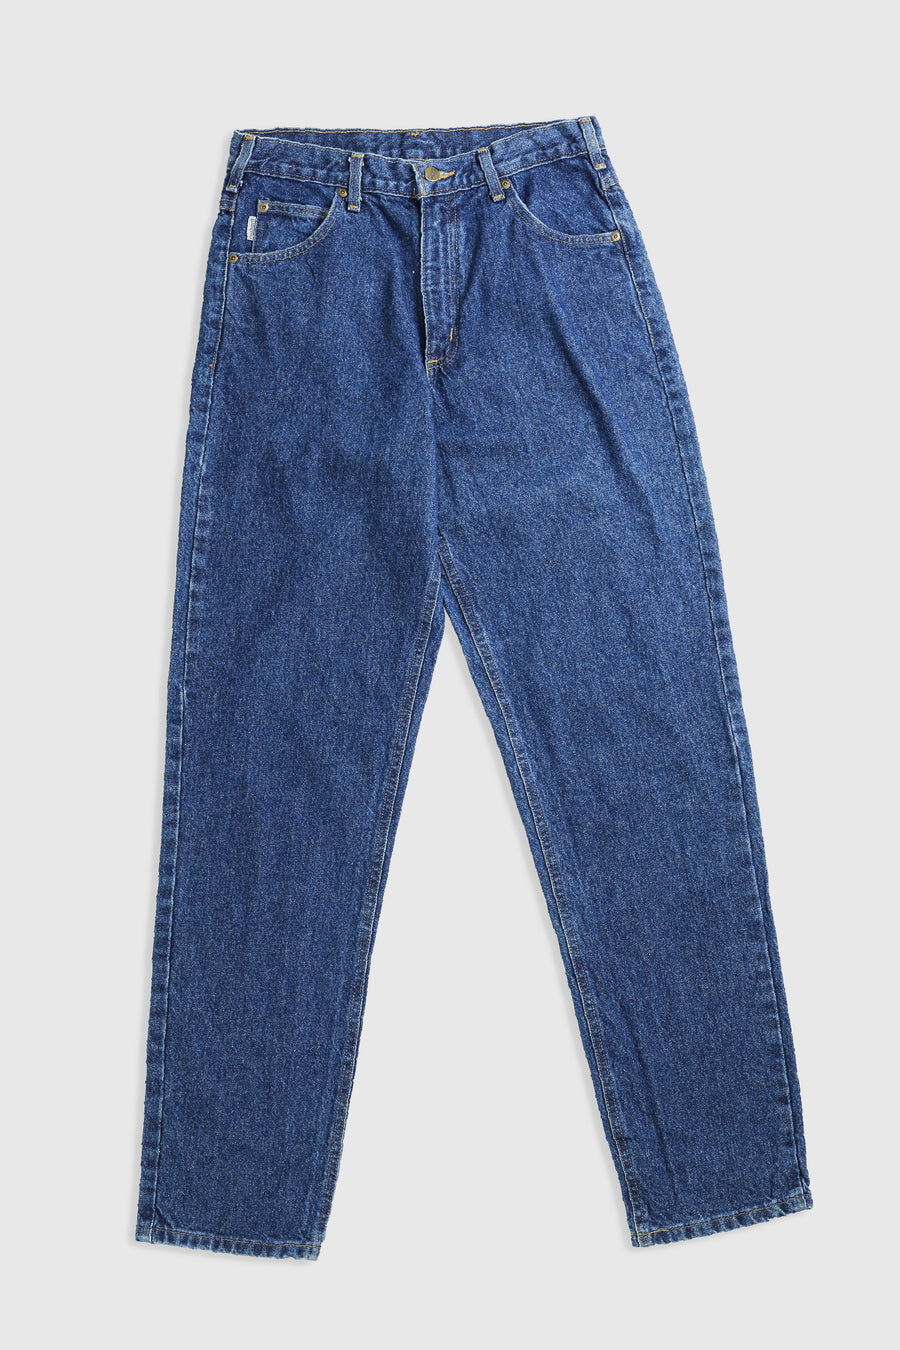 Vintage Carhartt Denim Work Pants - W31